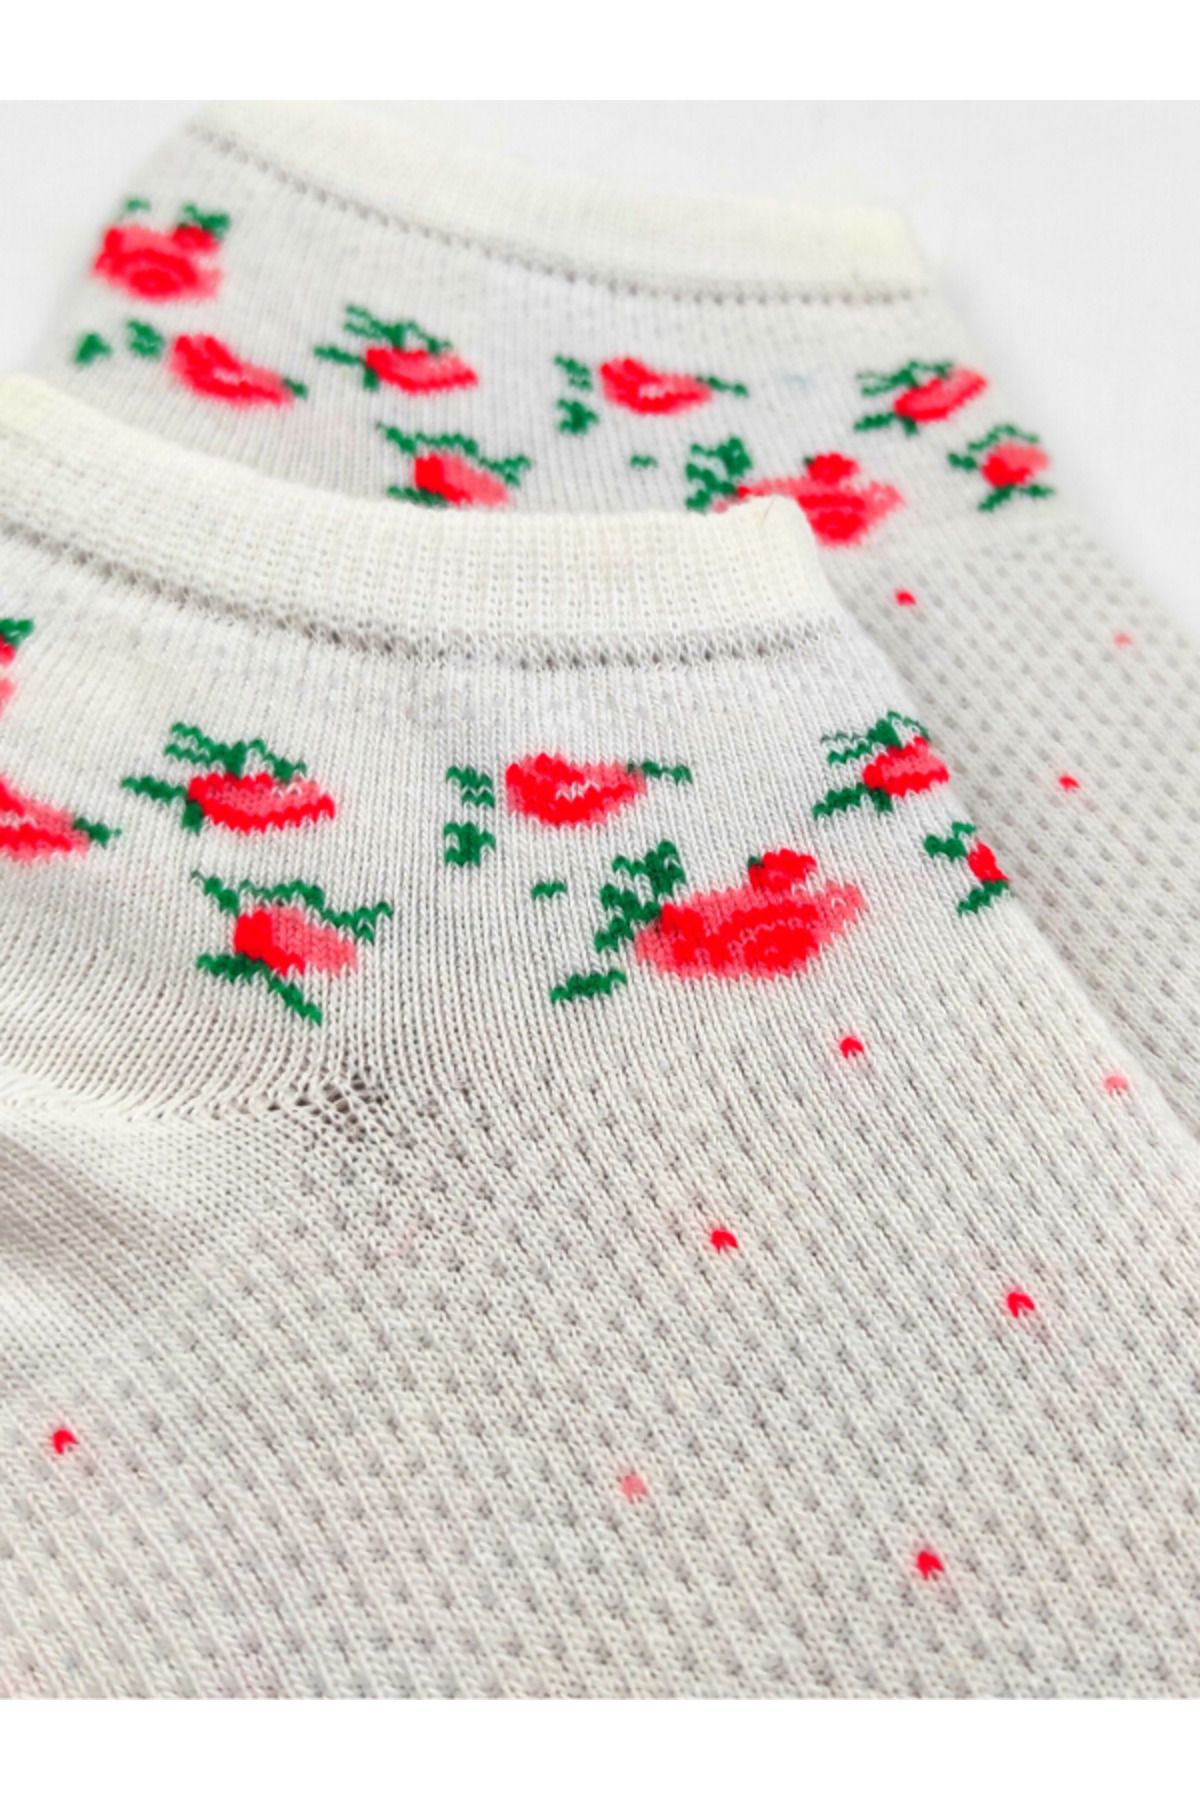 Bonapart Unisex Happy White Flower Renkli Patik Çorap